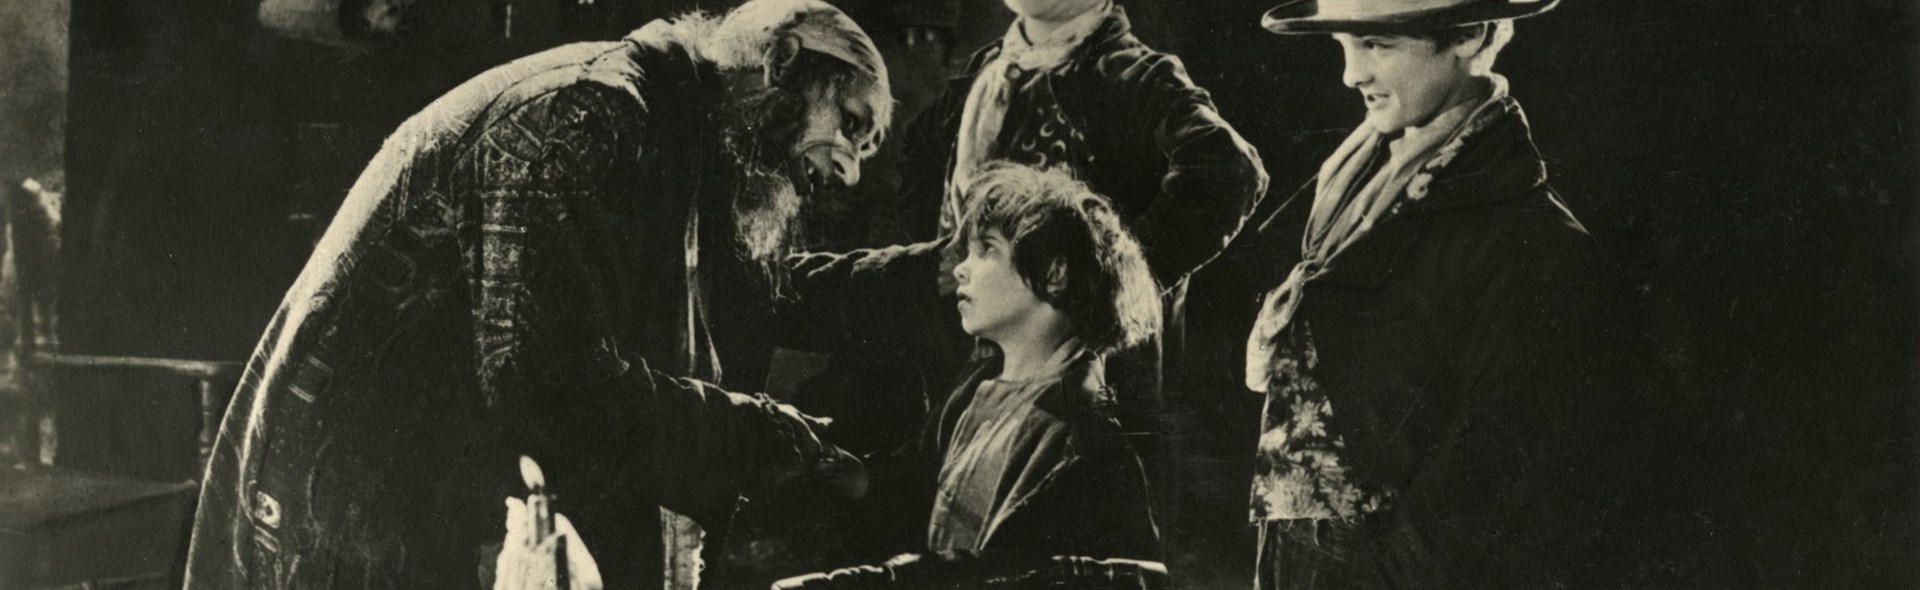 Oliver Twist- Accompanied Silent Film Screening with Jonny Best